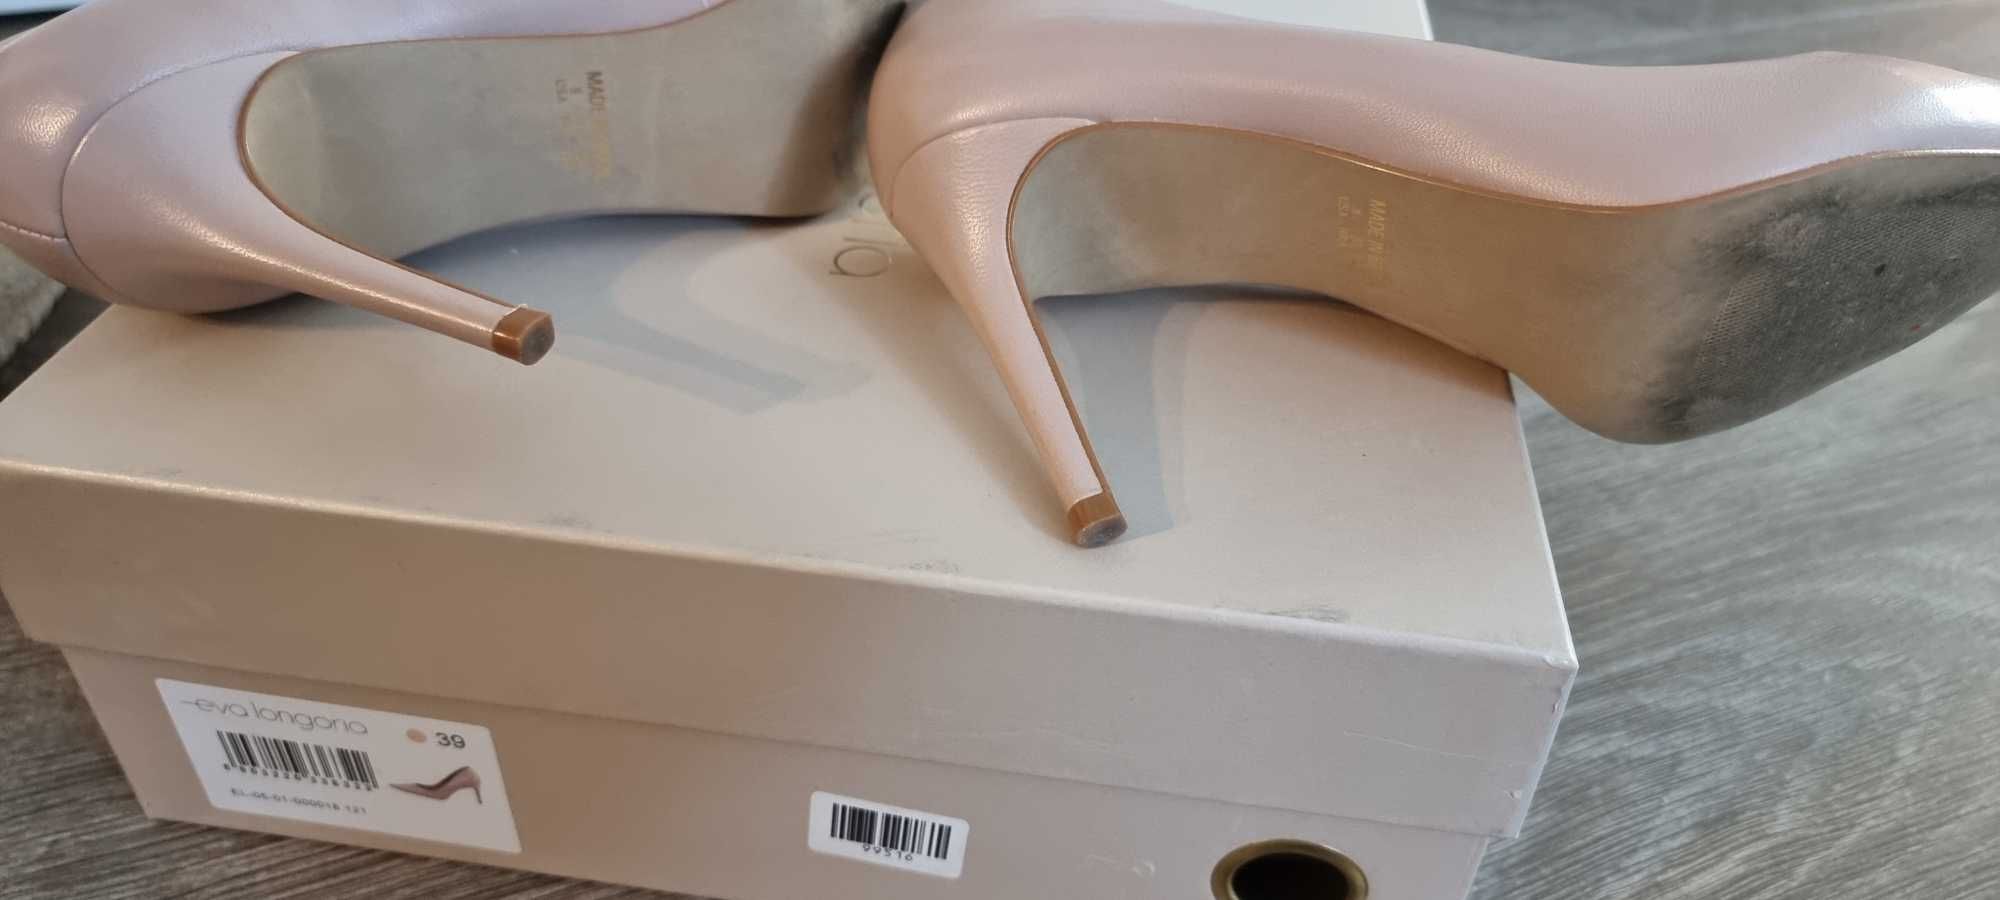 Pantofi piele stilleto Eva Longoria, nude, masura 39, purtati o data